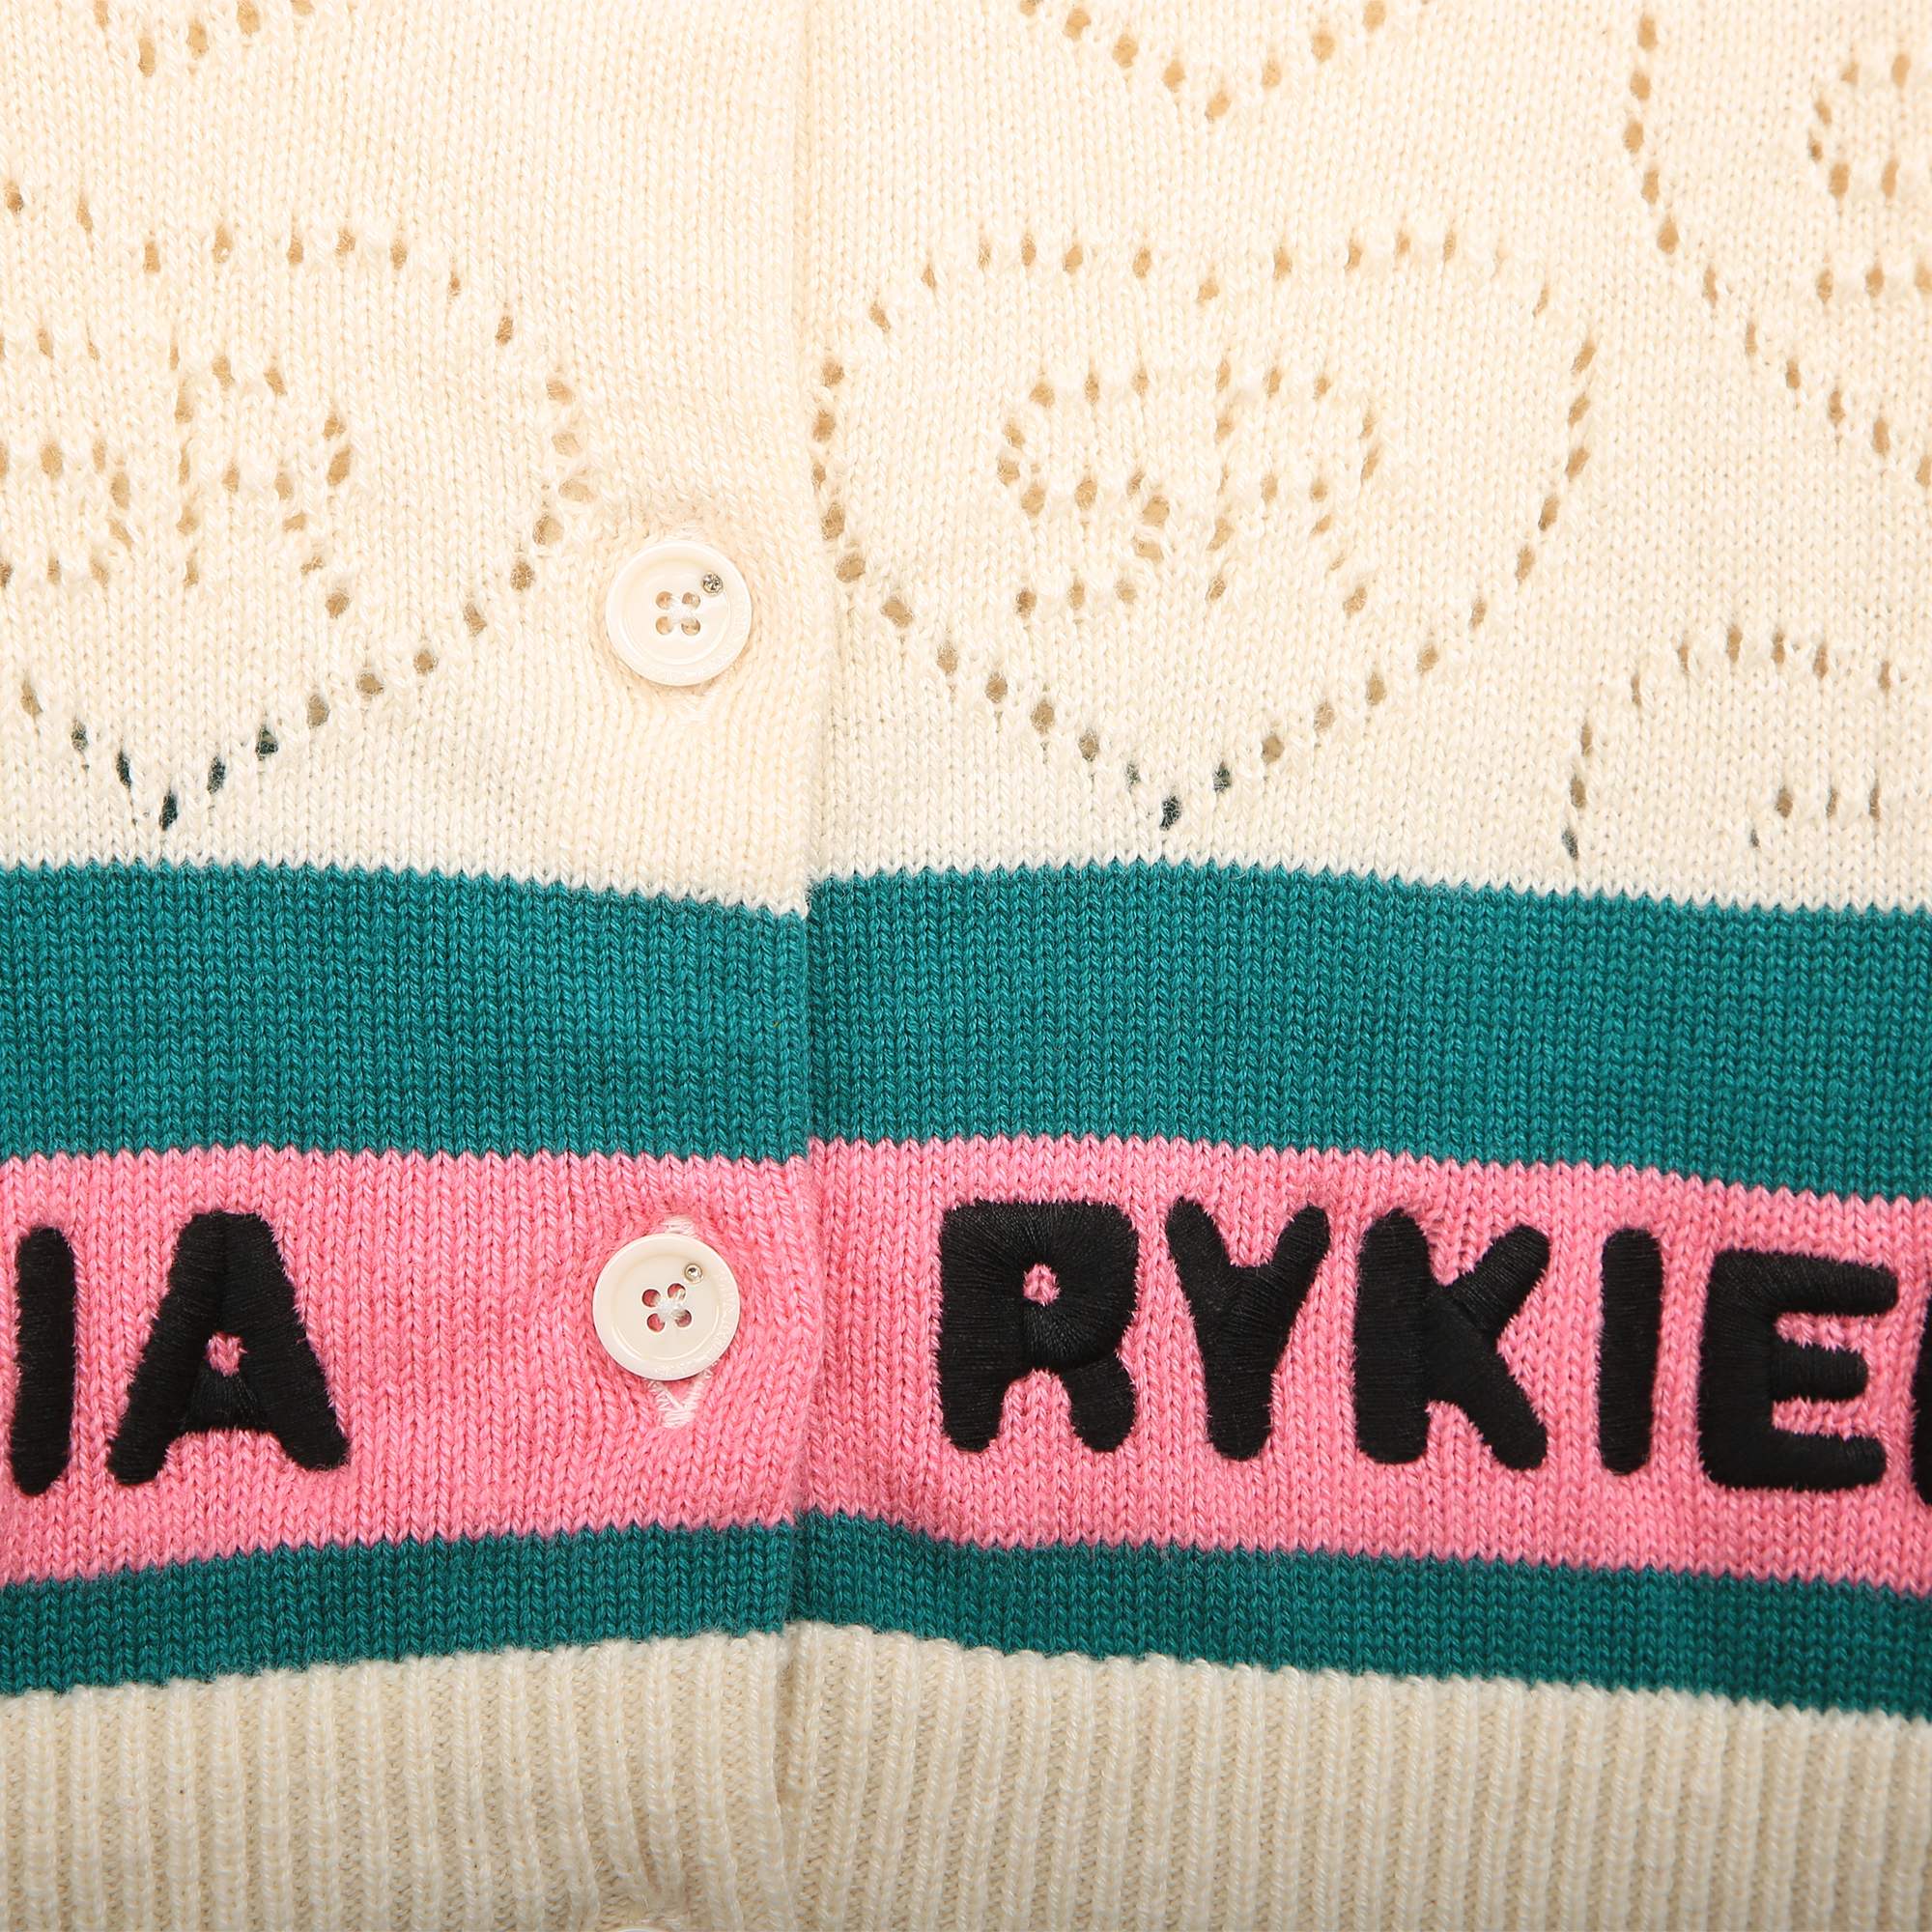 Open-stitch motif cardigan SONIA RYKIEL for GIRL